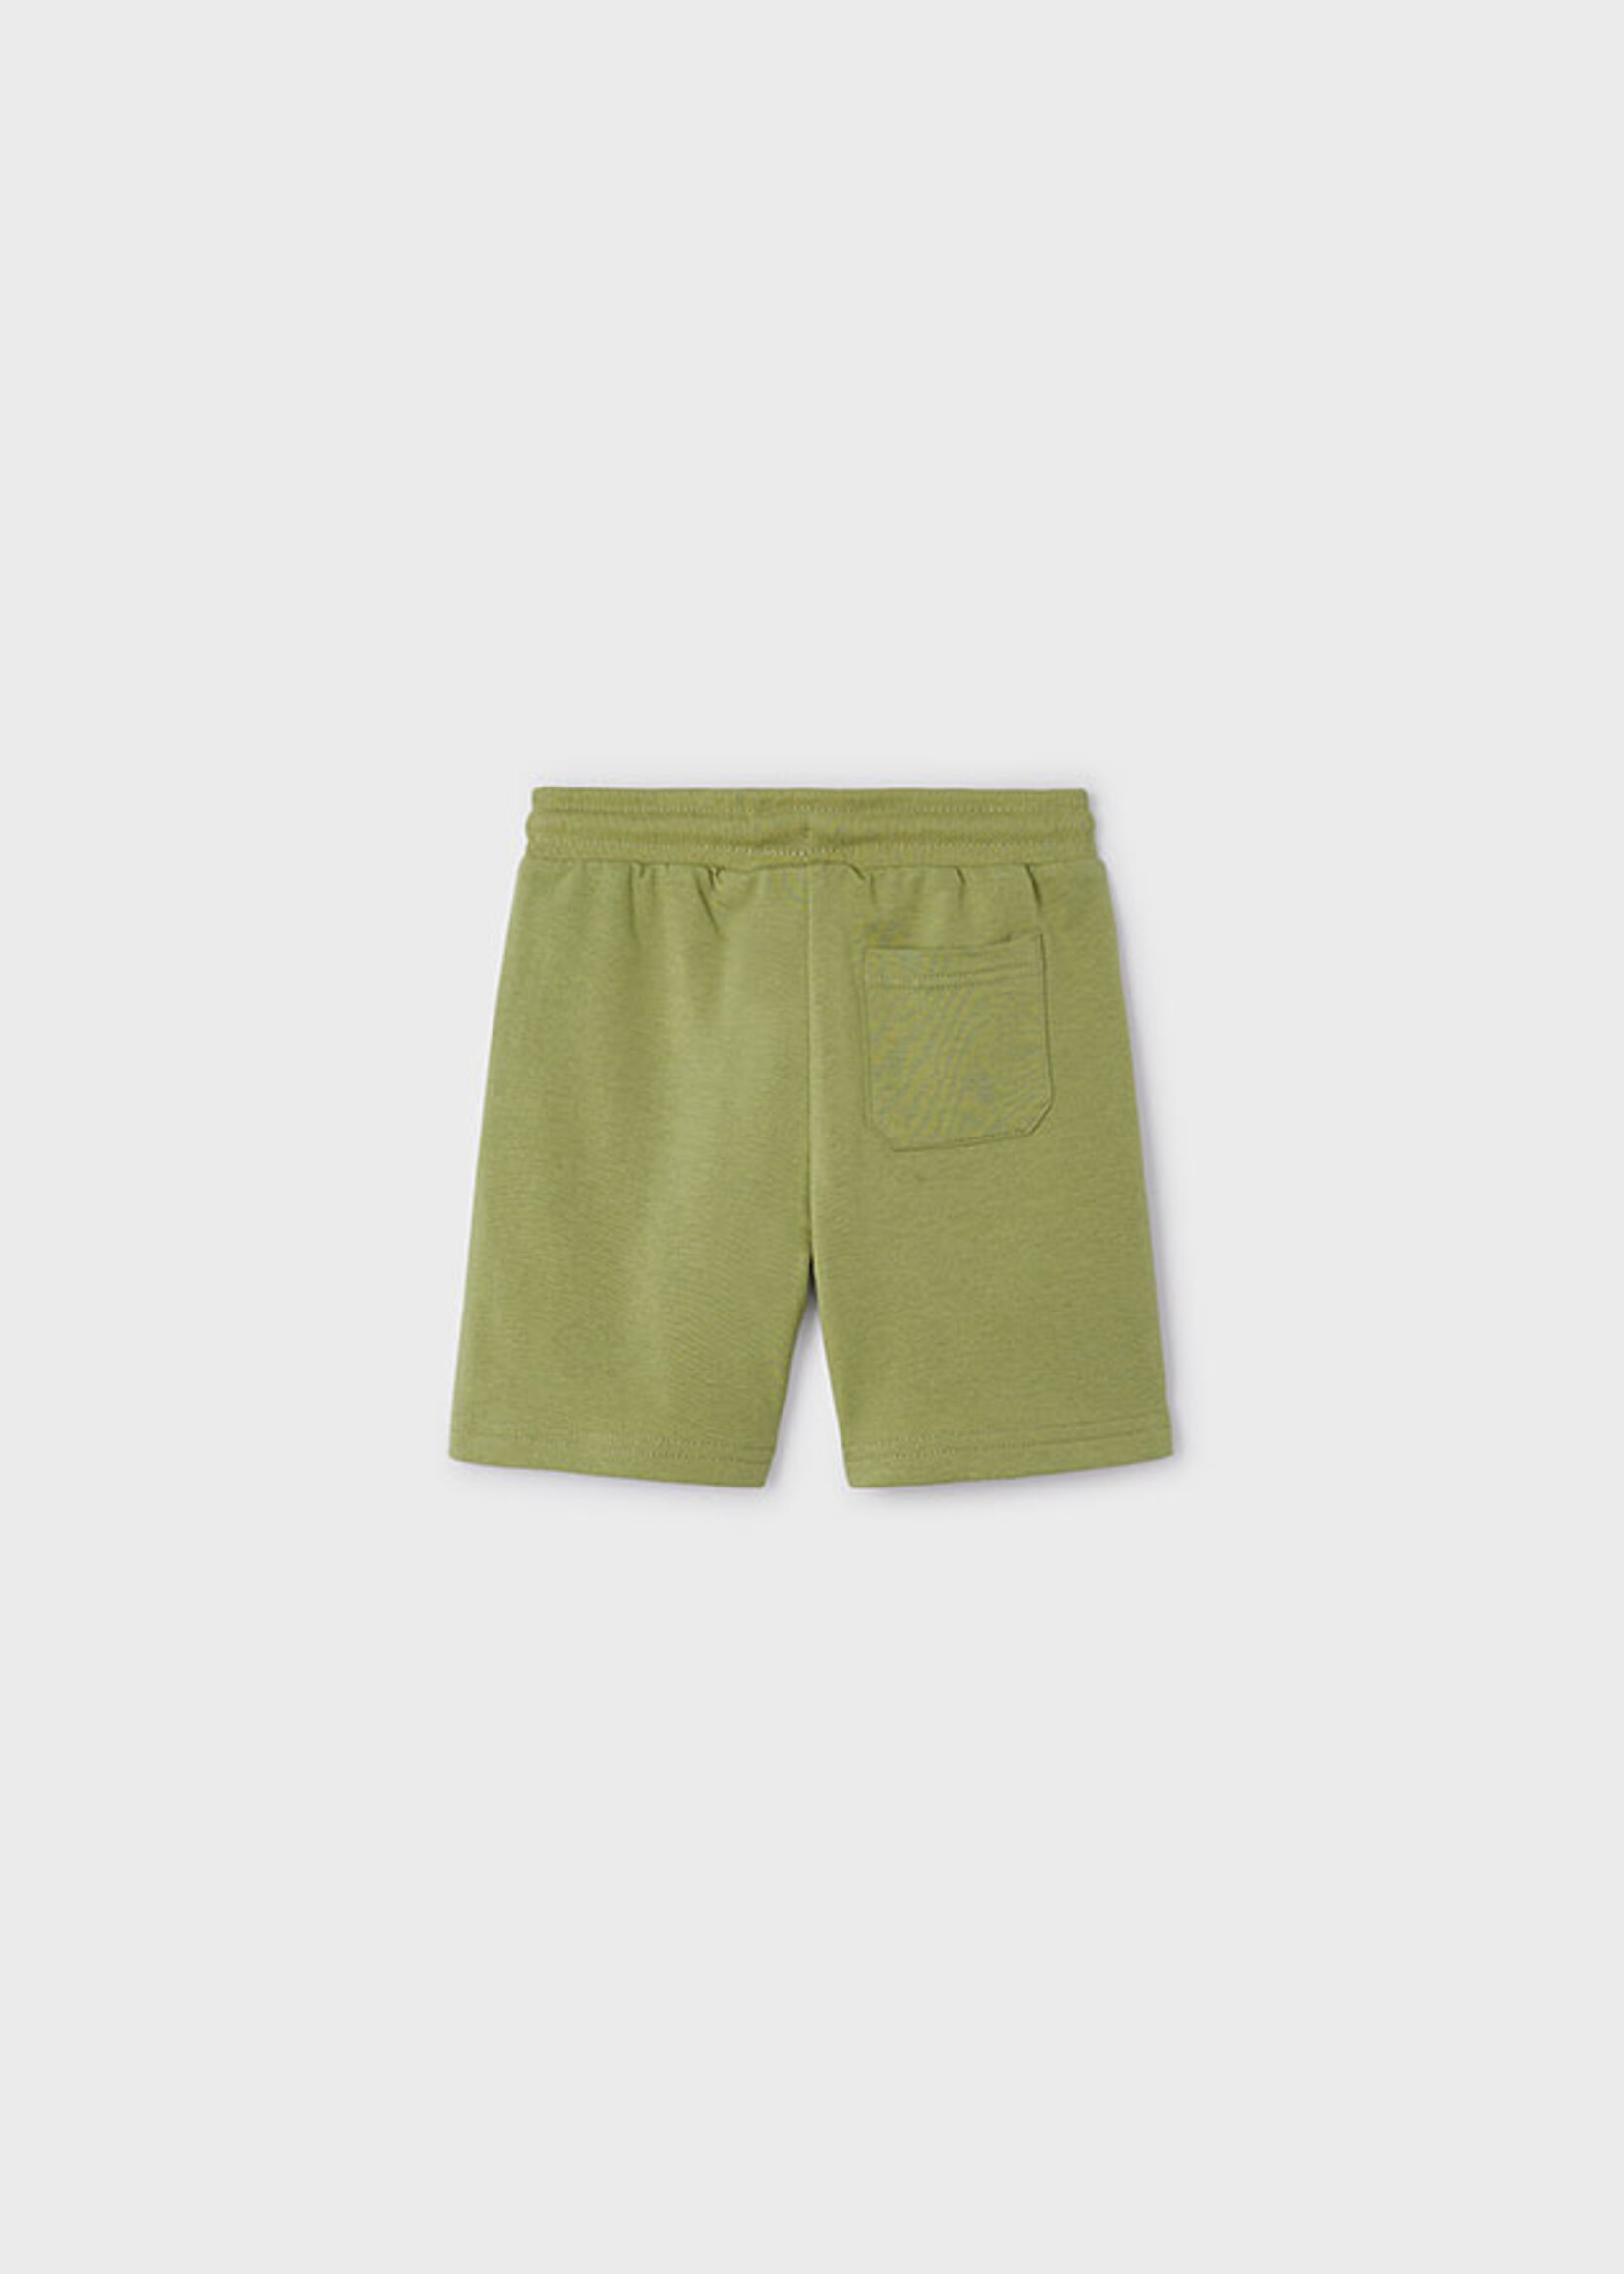 Mayoral Mini Boy             611 Basic fleece shorts           Iguana grn